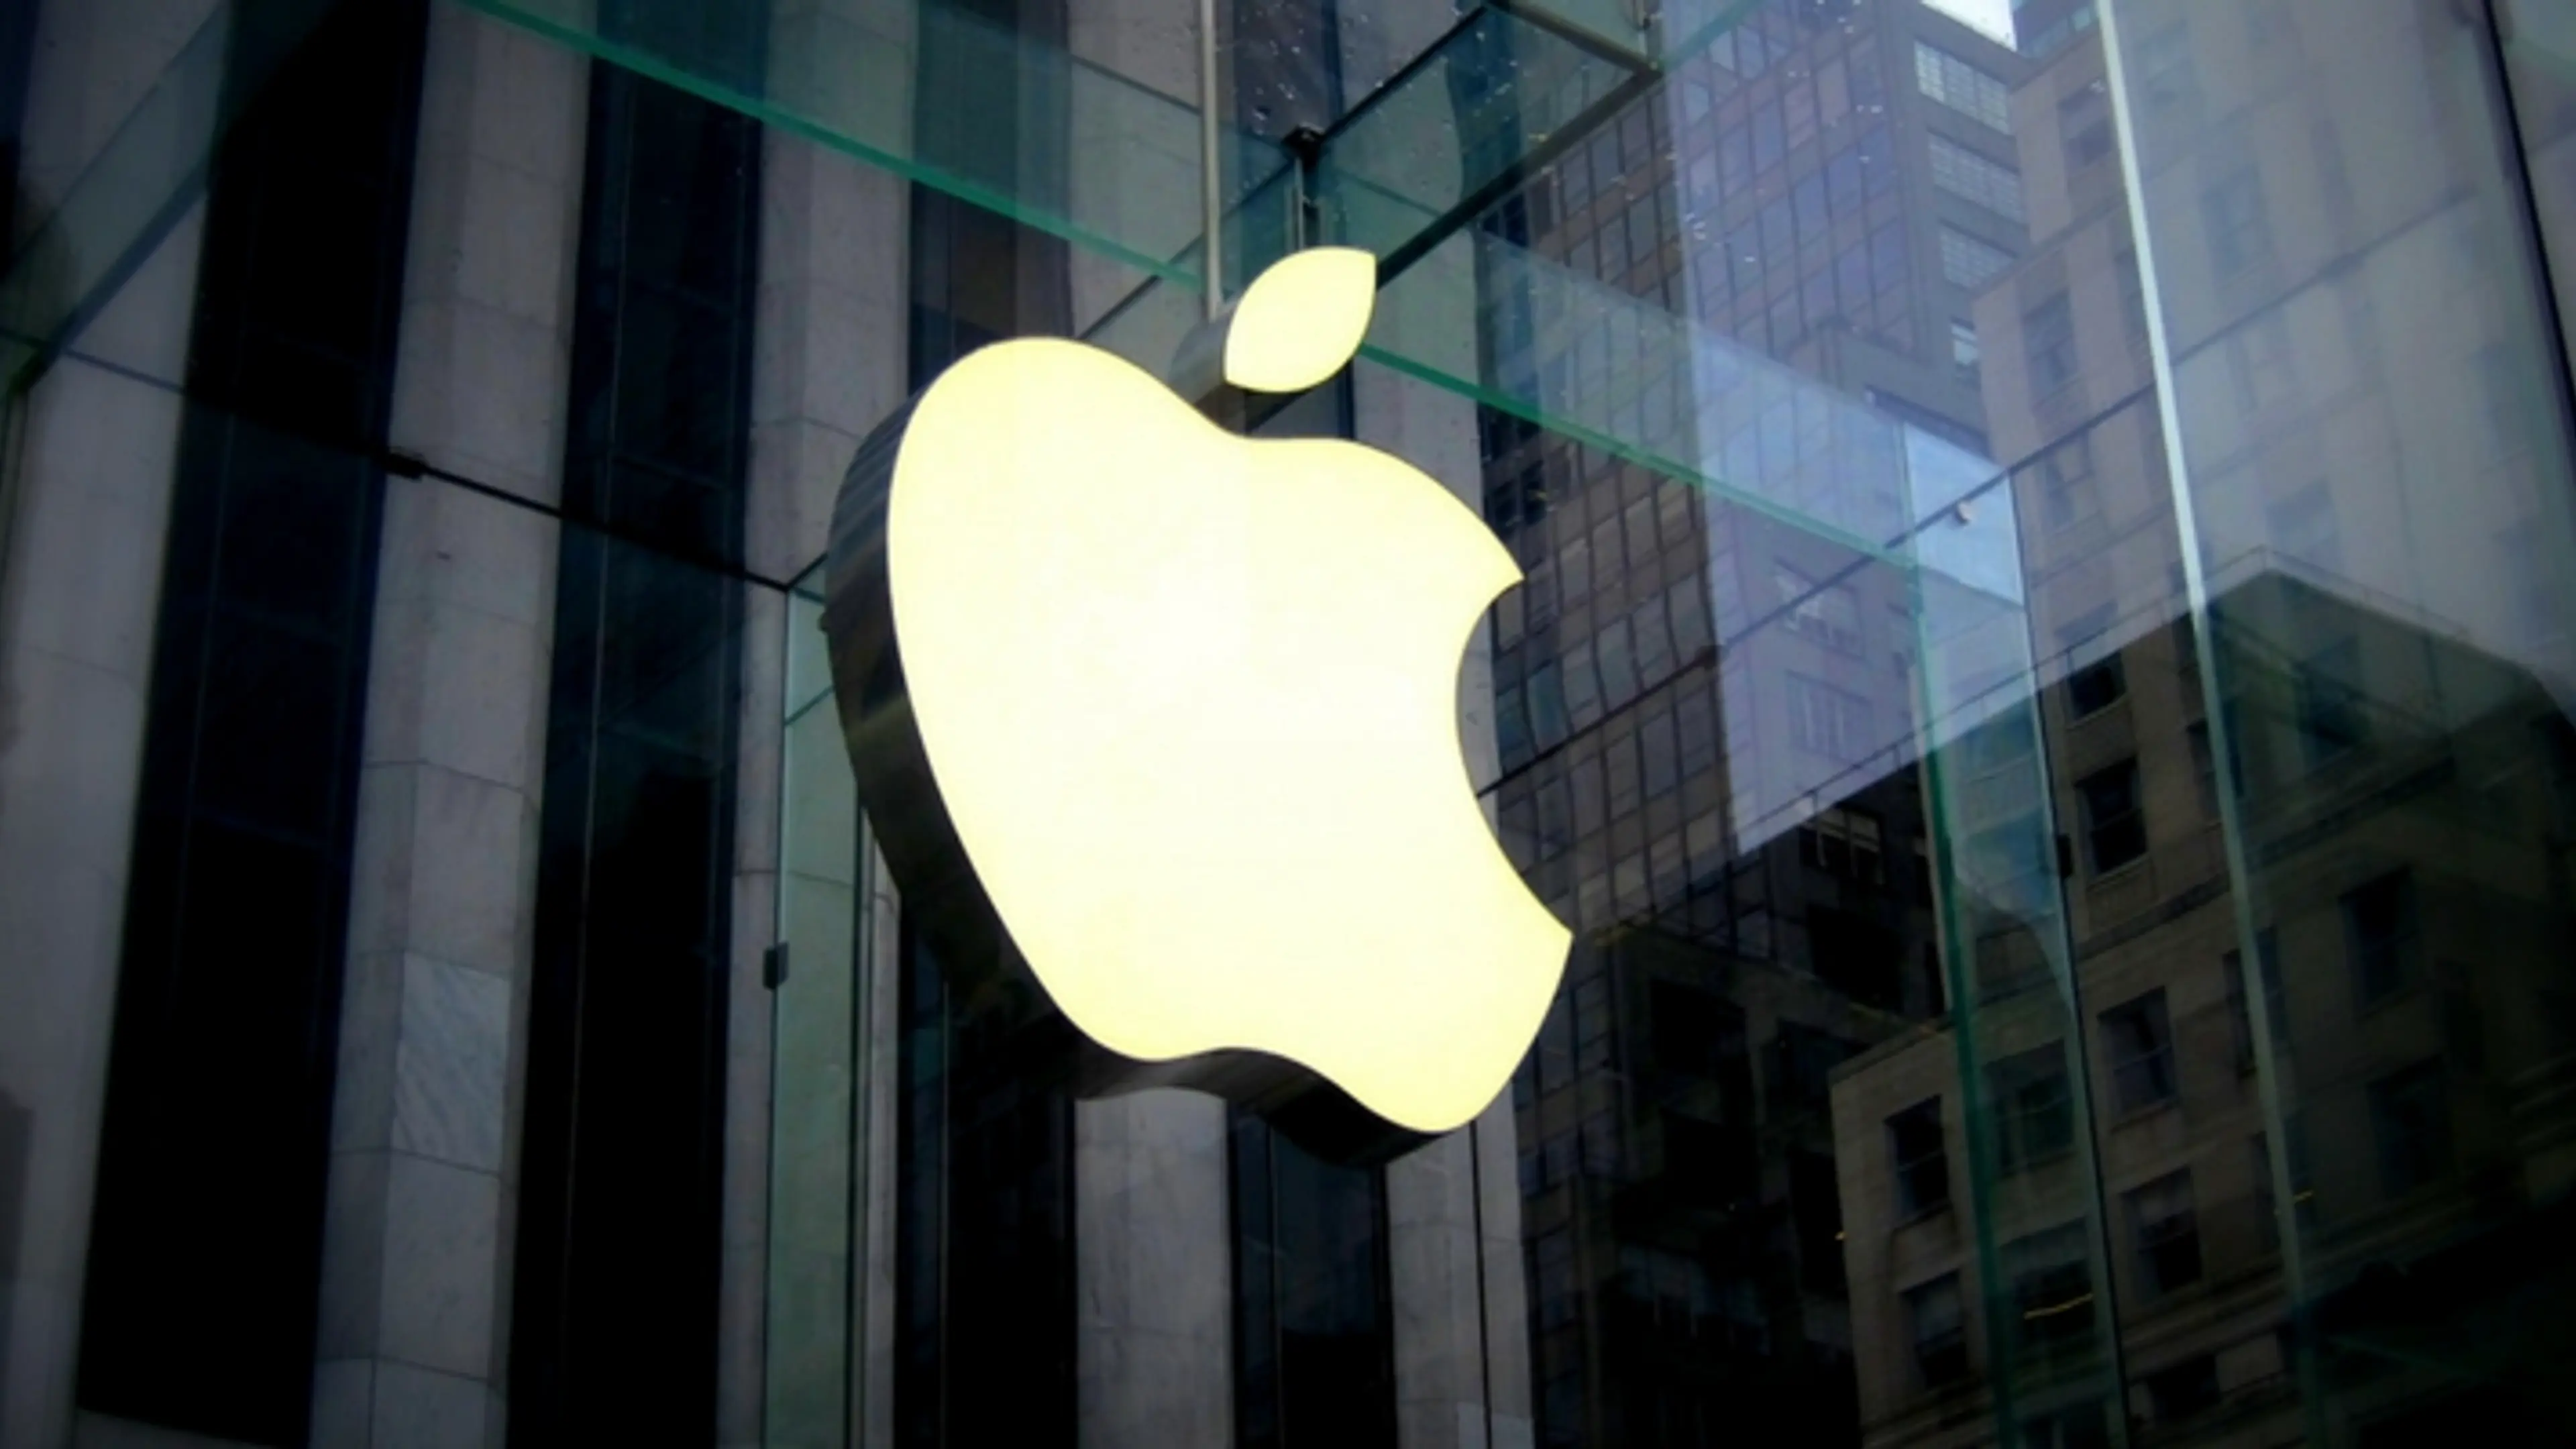 Coronavirus creates iPhone supply shortages, set to impact Apple's revenue